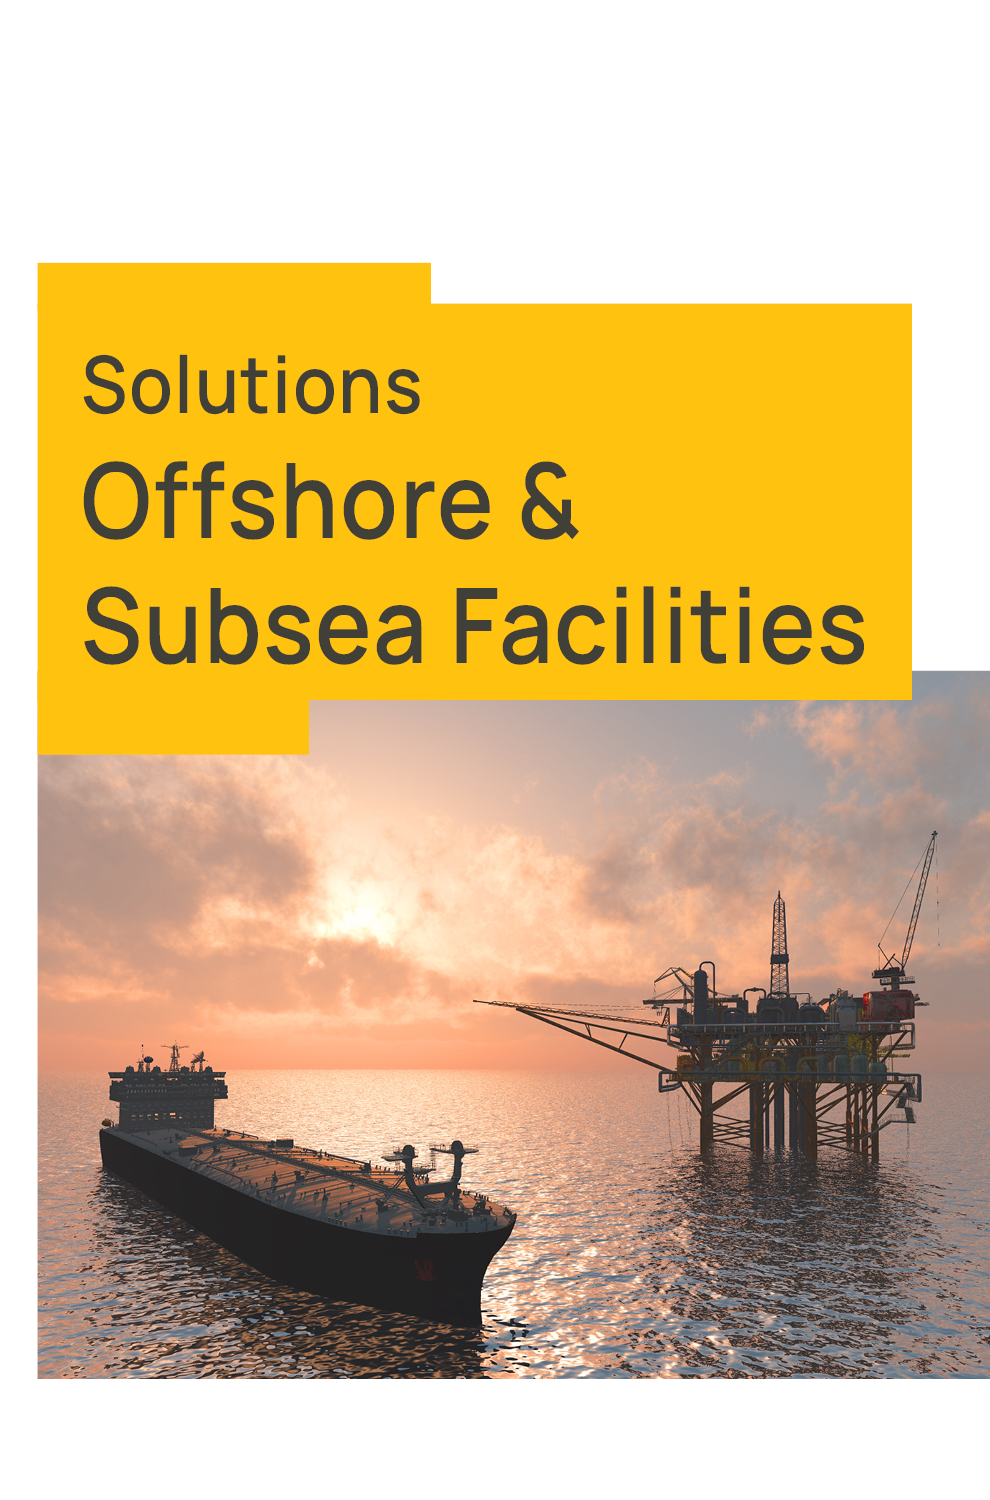 Offshore & Subsea Facilities Flyer